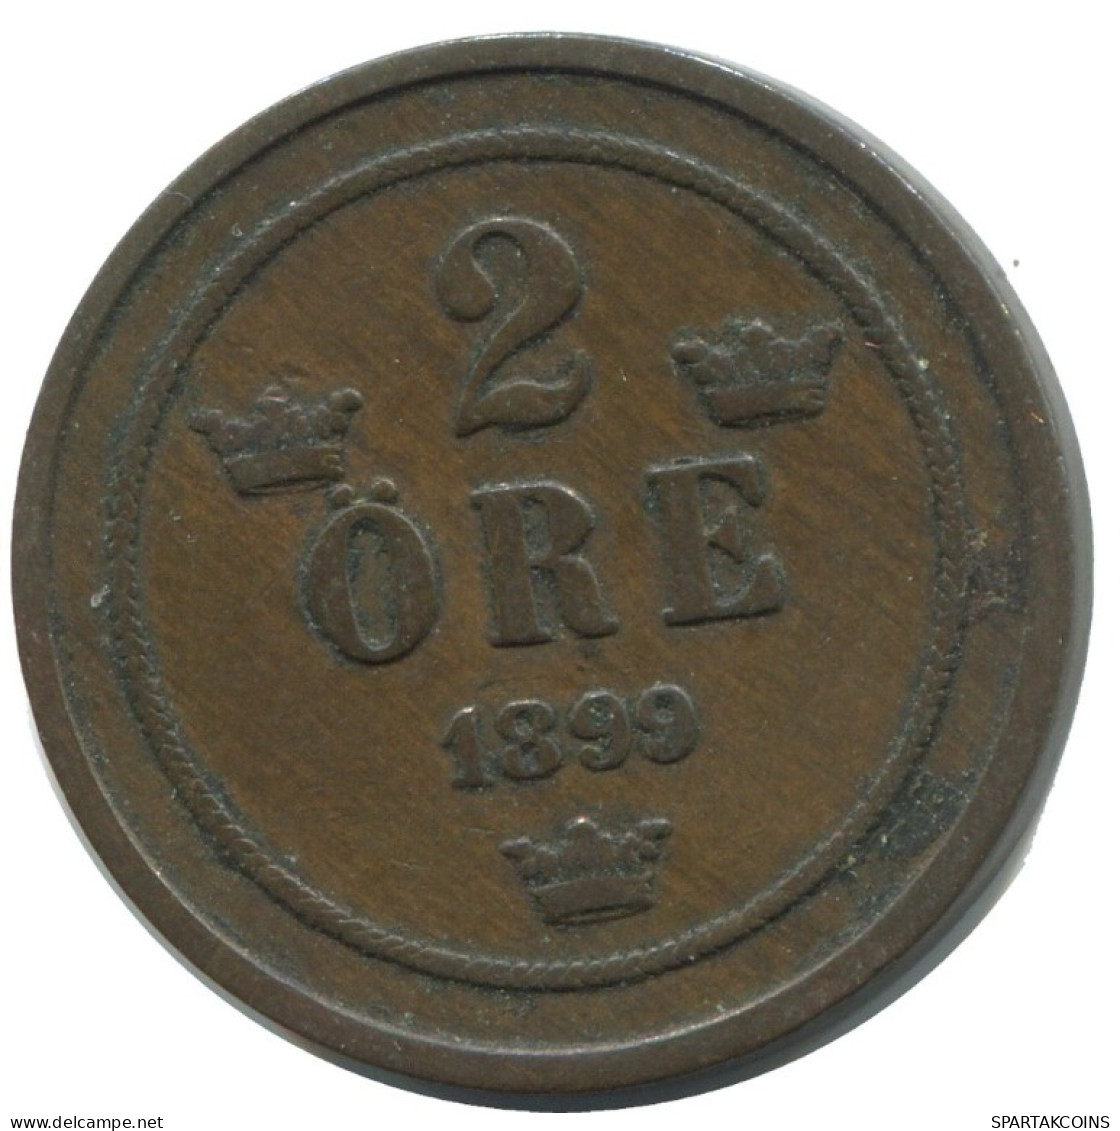 2 ORE 1899 SWEDEN Coin #AC963.2.U.A - Schweden